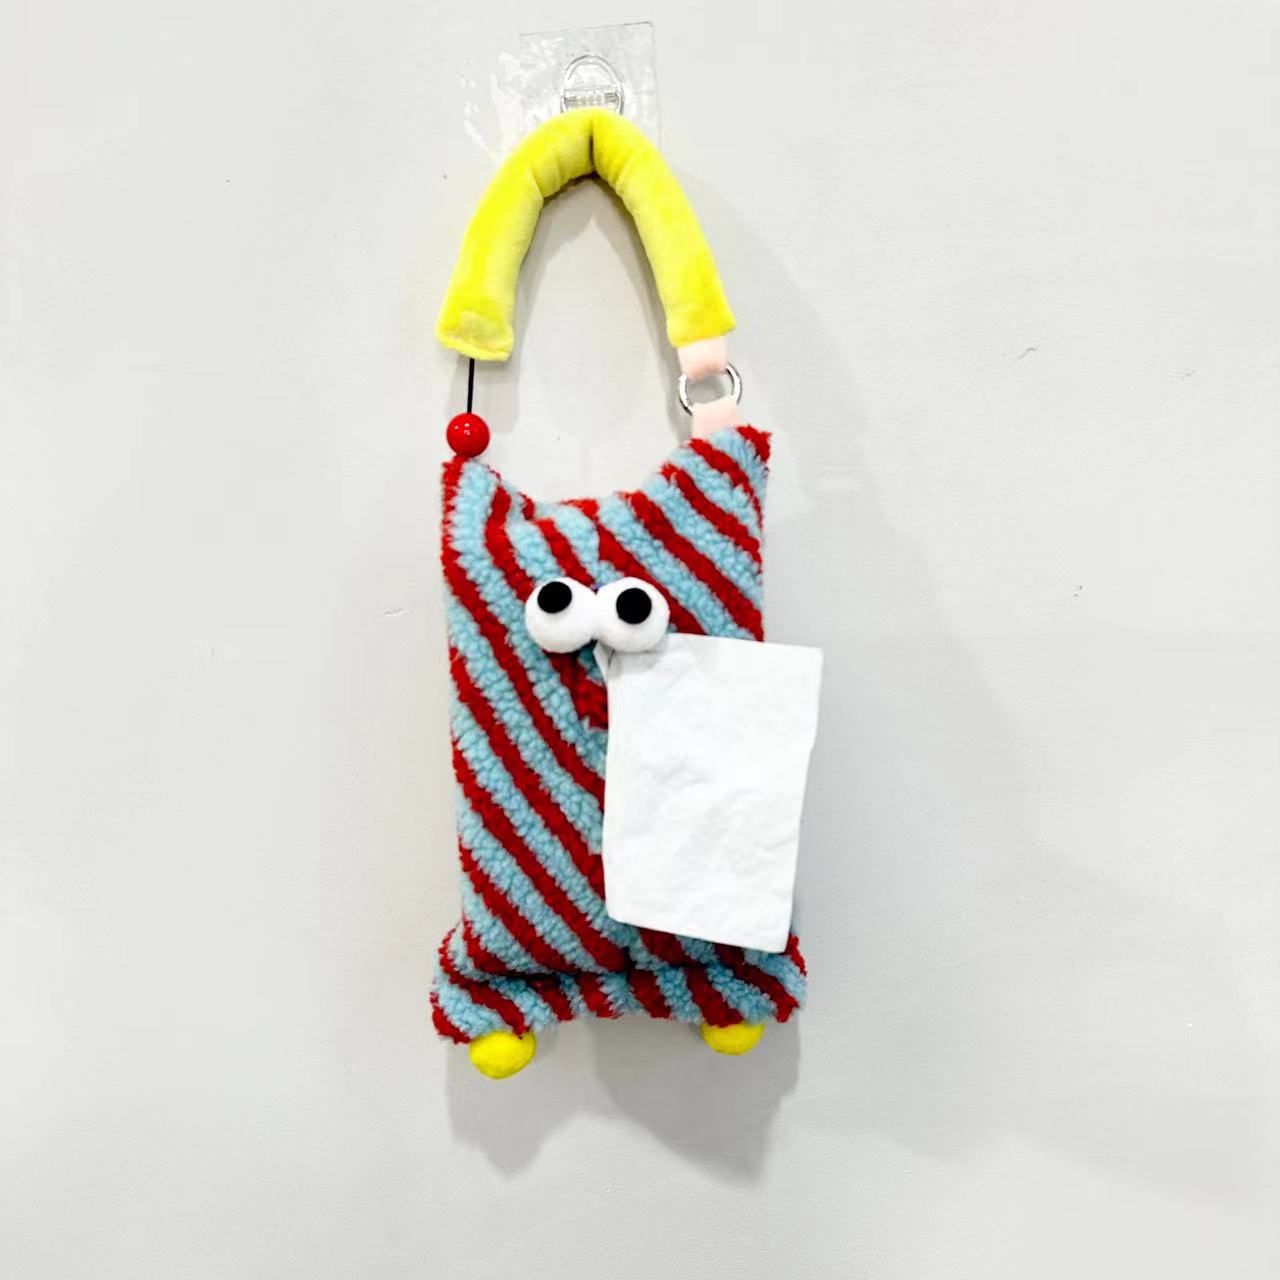 Cartoon Monster Hanging Car Tissue Box - Car Accessories Tissue Bag - Cute Doll Decorative Pack